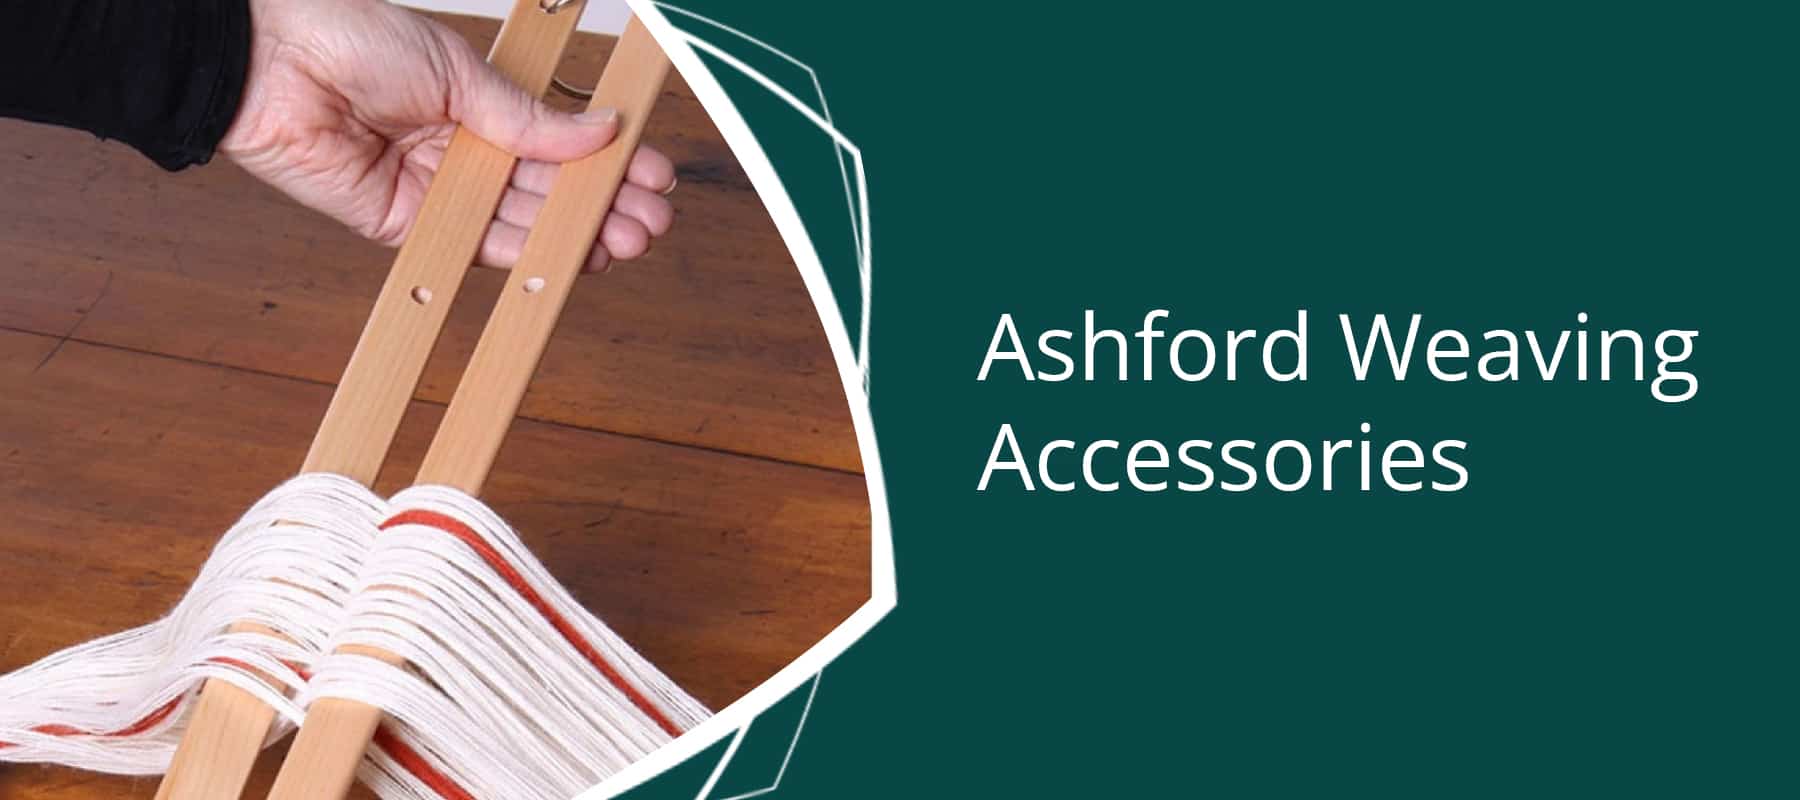 Ashford Weaving Accessories - Thread Collective Australia